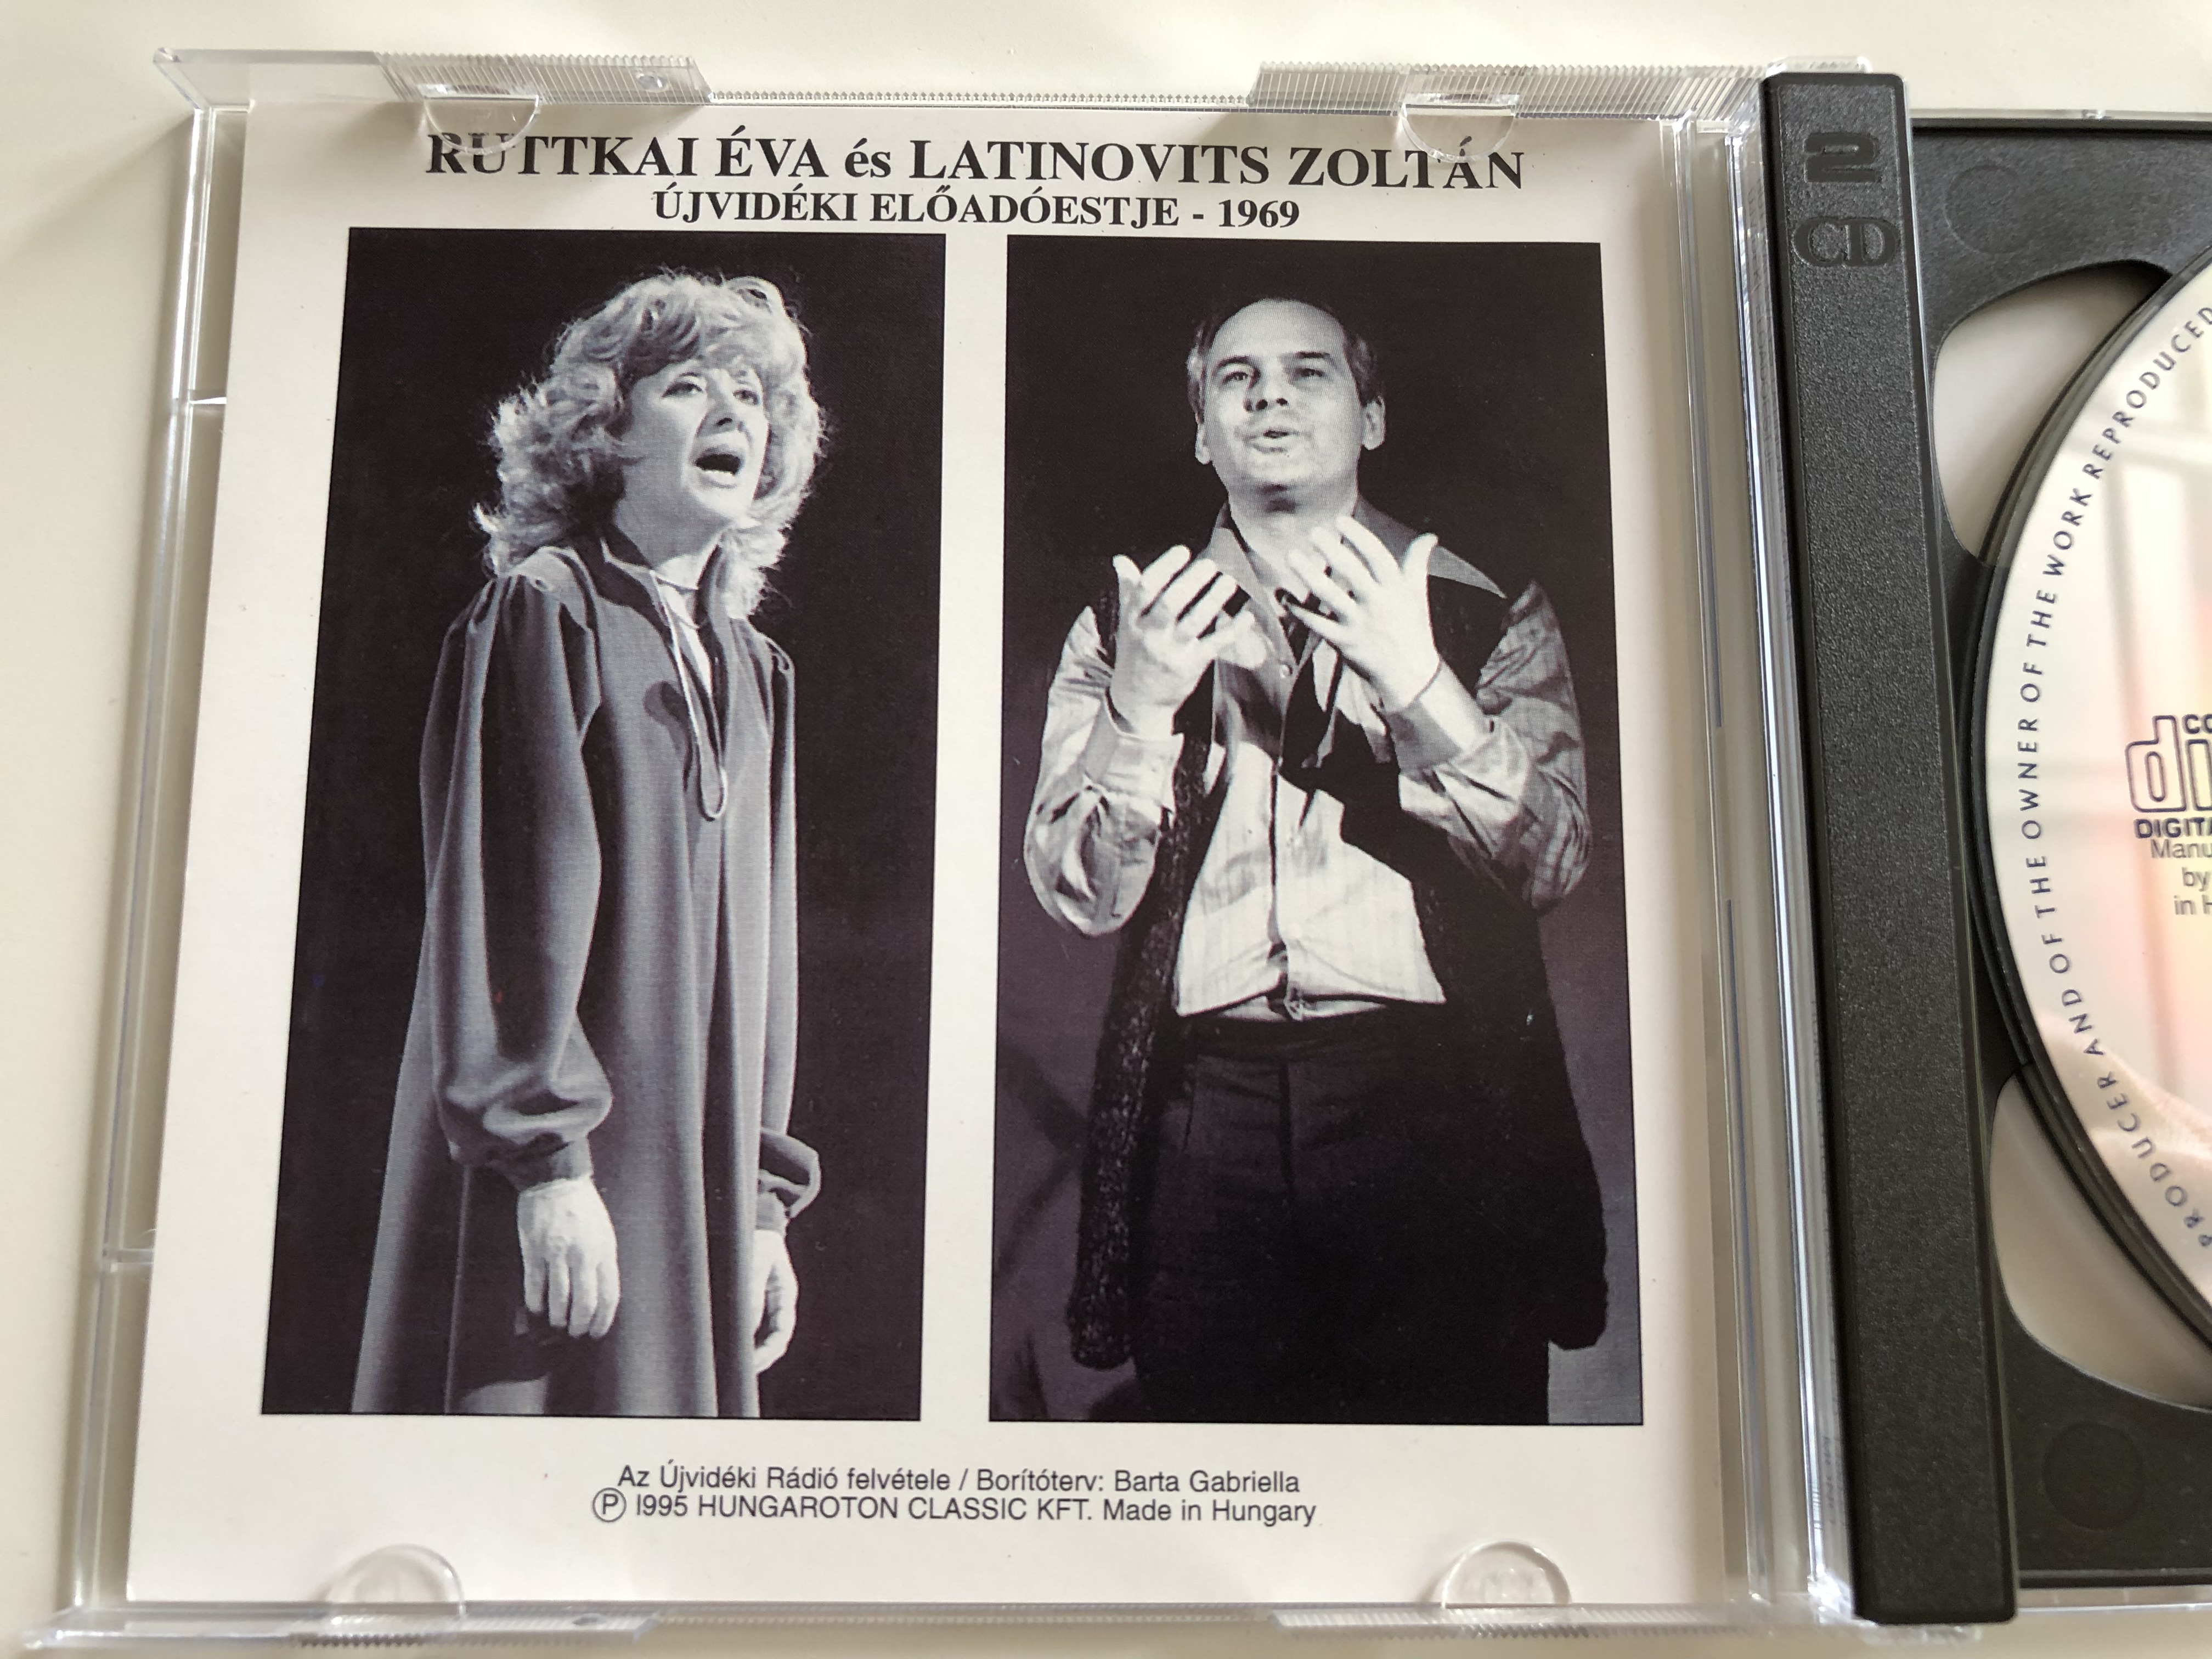 ruttkai-va-s-latinovits-zolt-n-jvid-ki-el-ad-estje-hungaroton-classic-audio-cd-1995-hcd-14080-81-2x-audio-cd-4-.jpg